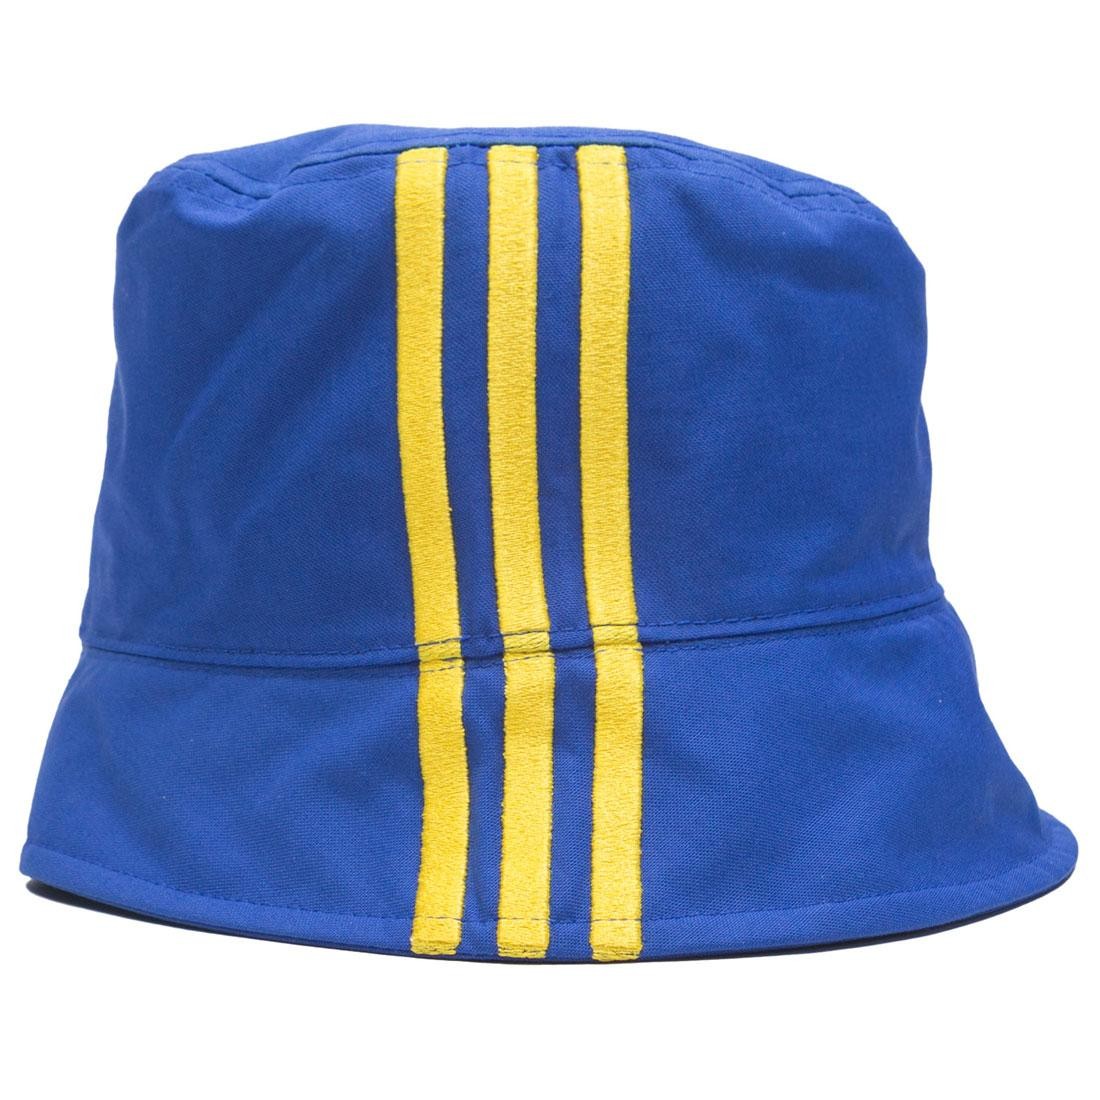 Adquisición Extranjero negativo Adidas Consortium x Engineered Garments Reversible Bucket Hat blue bold blue